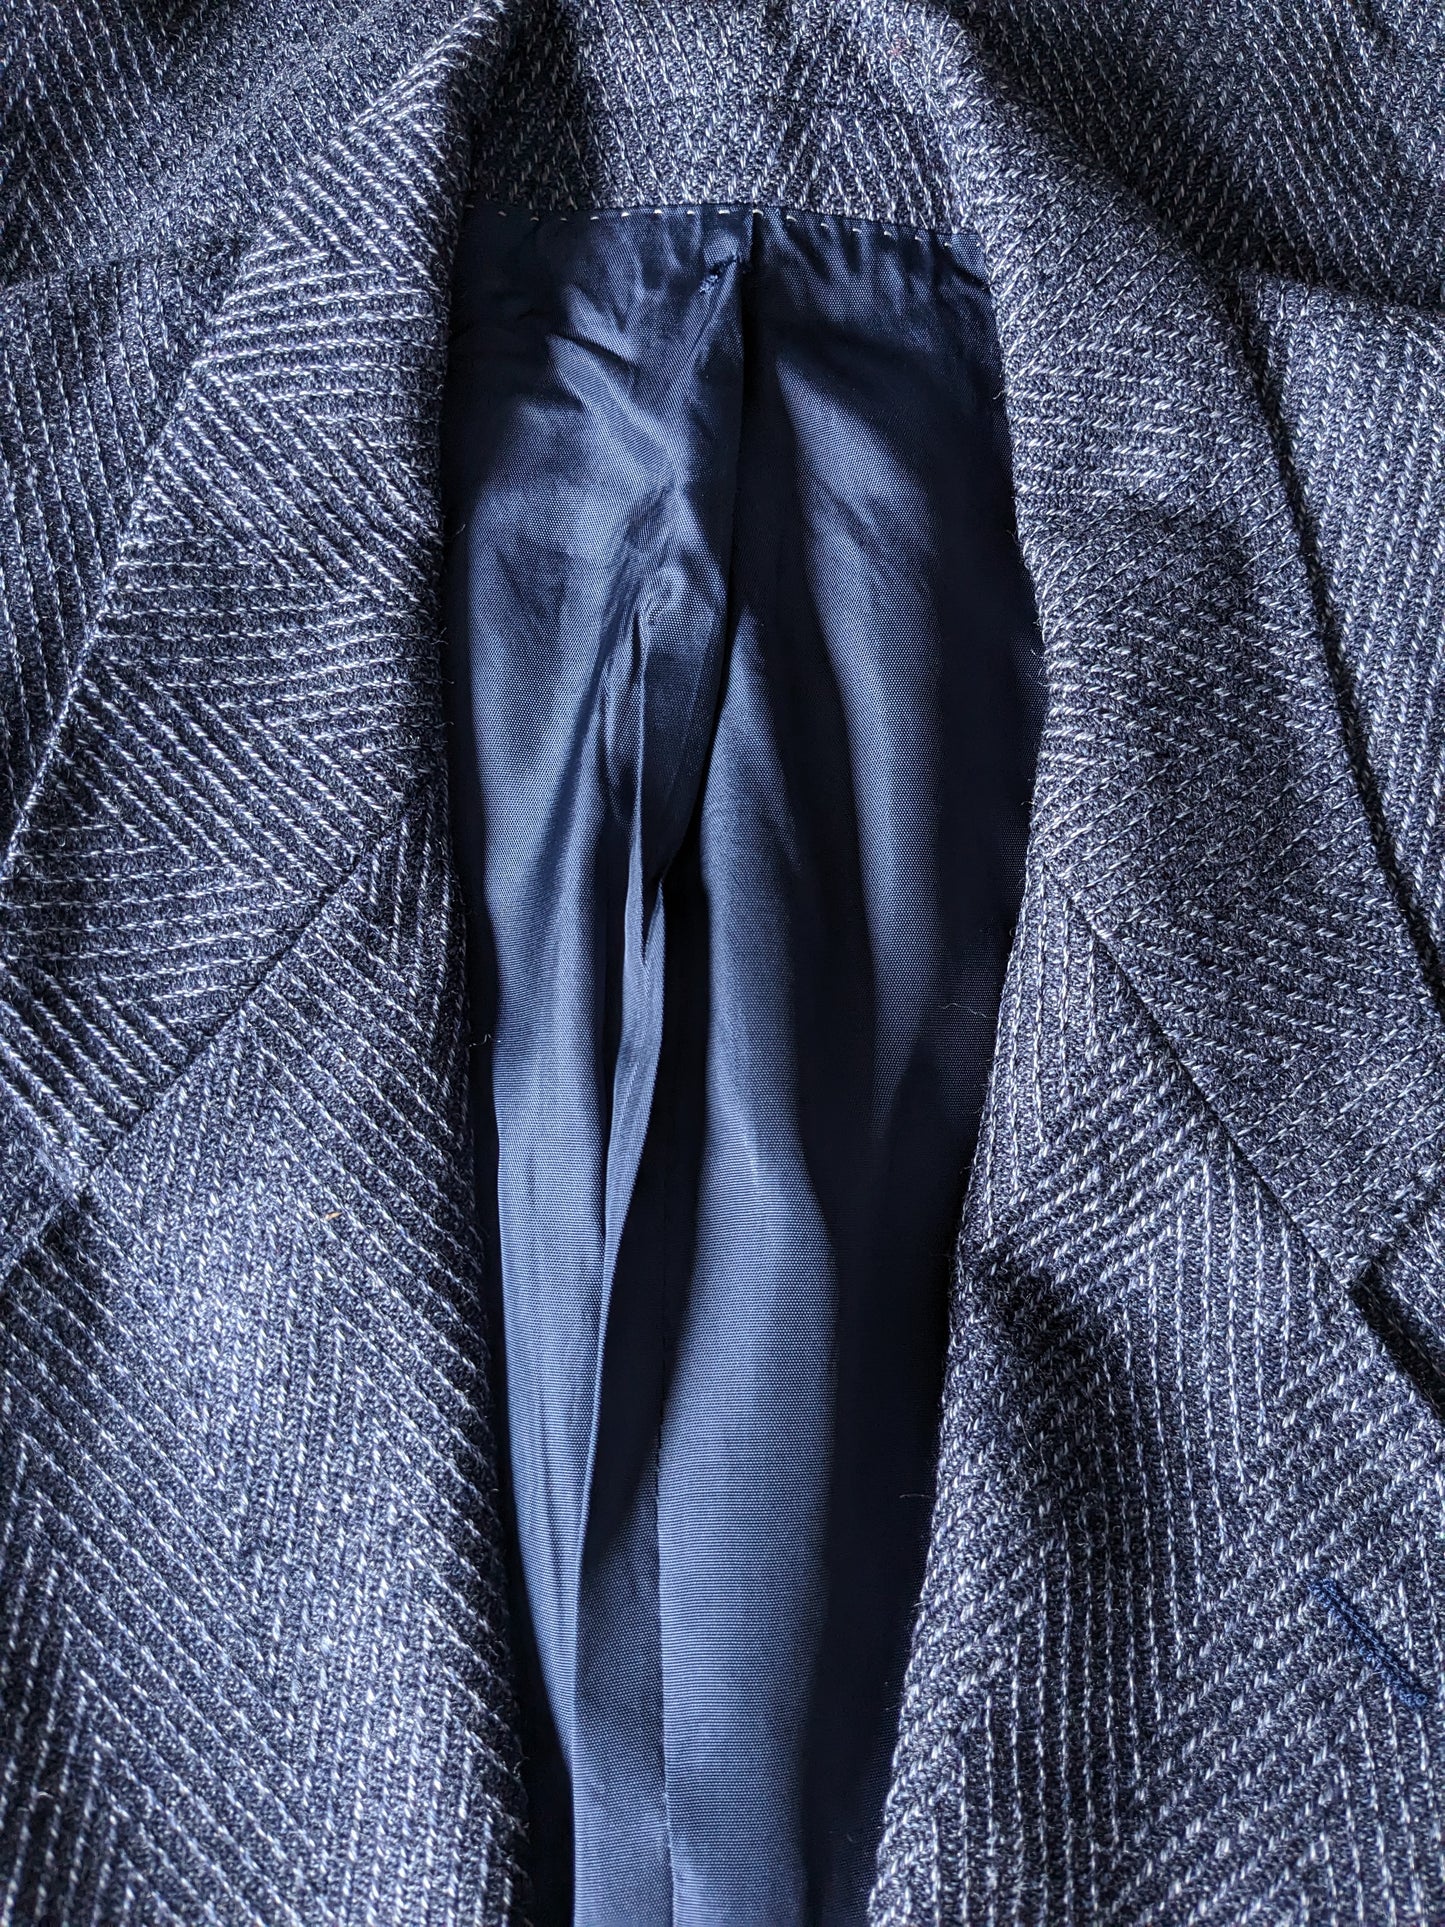 Vintage Double Breasted Emilio Sandrini Colbert. Blue black gray mixed. Size 46 / S.